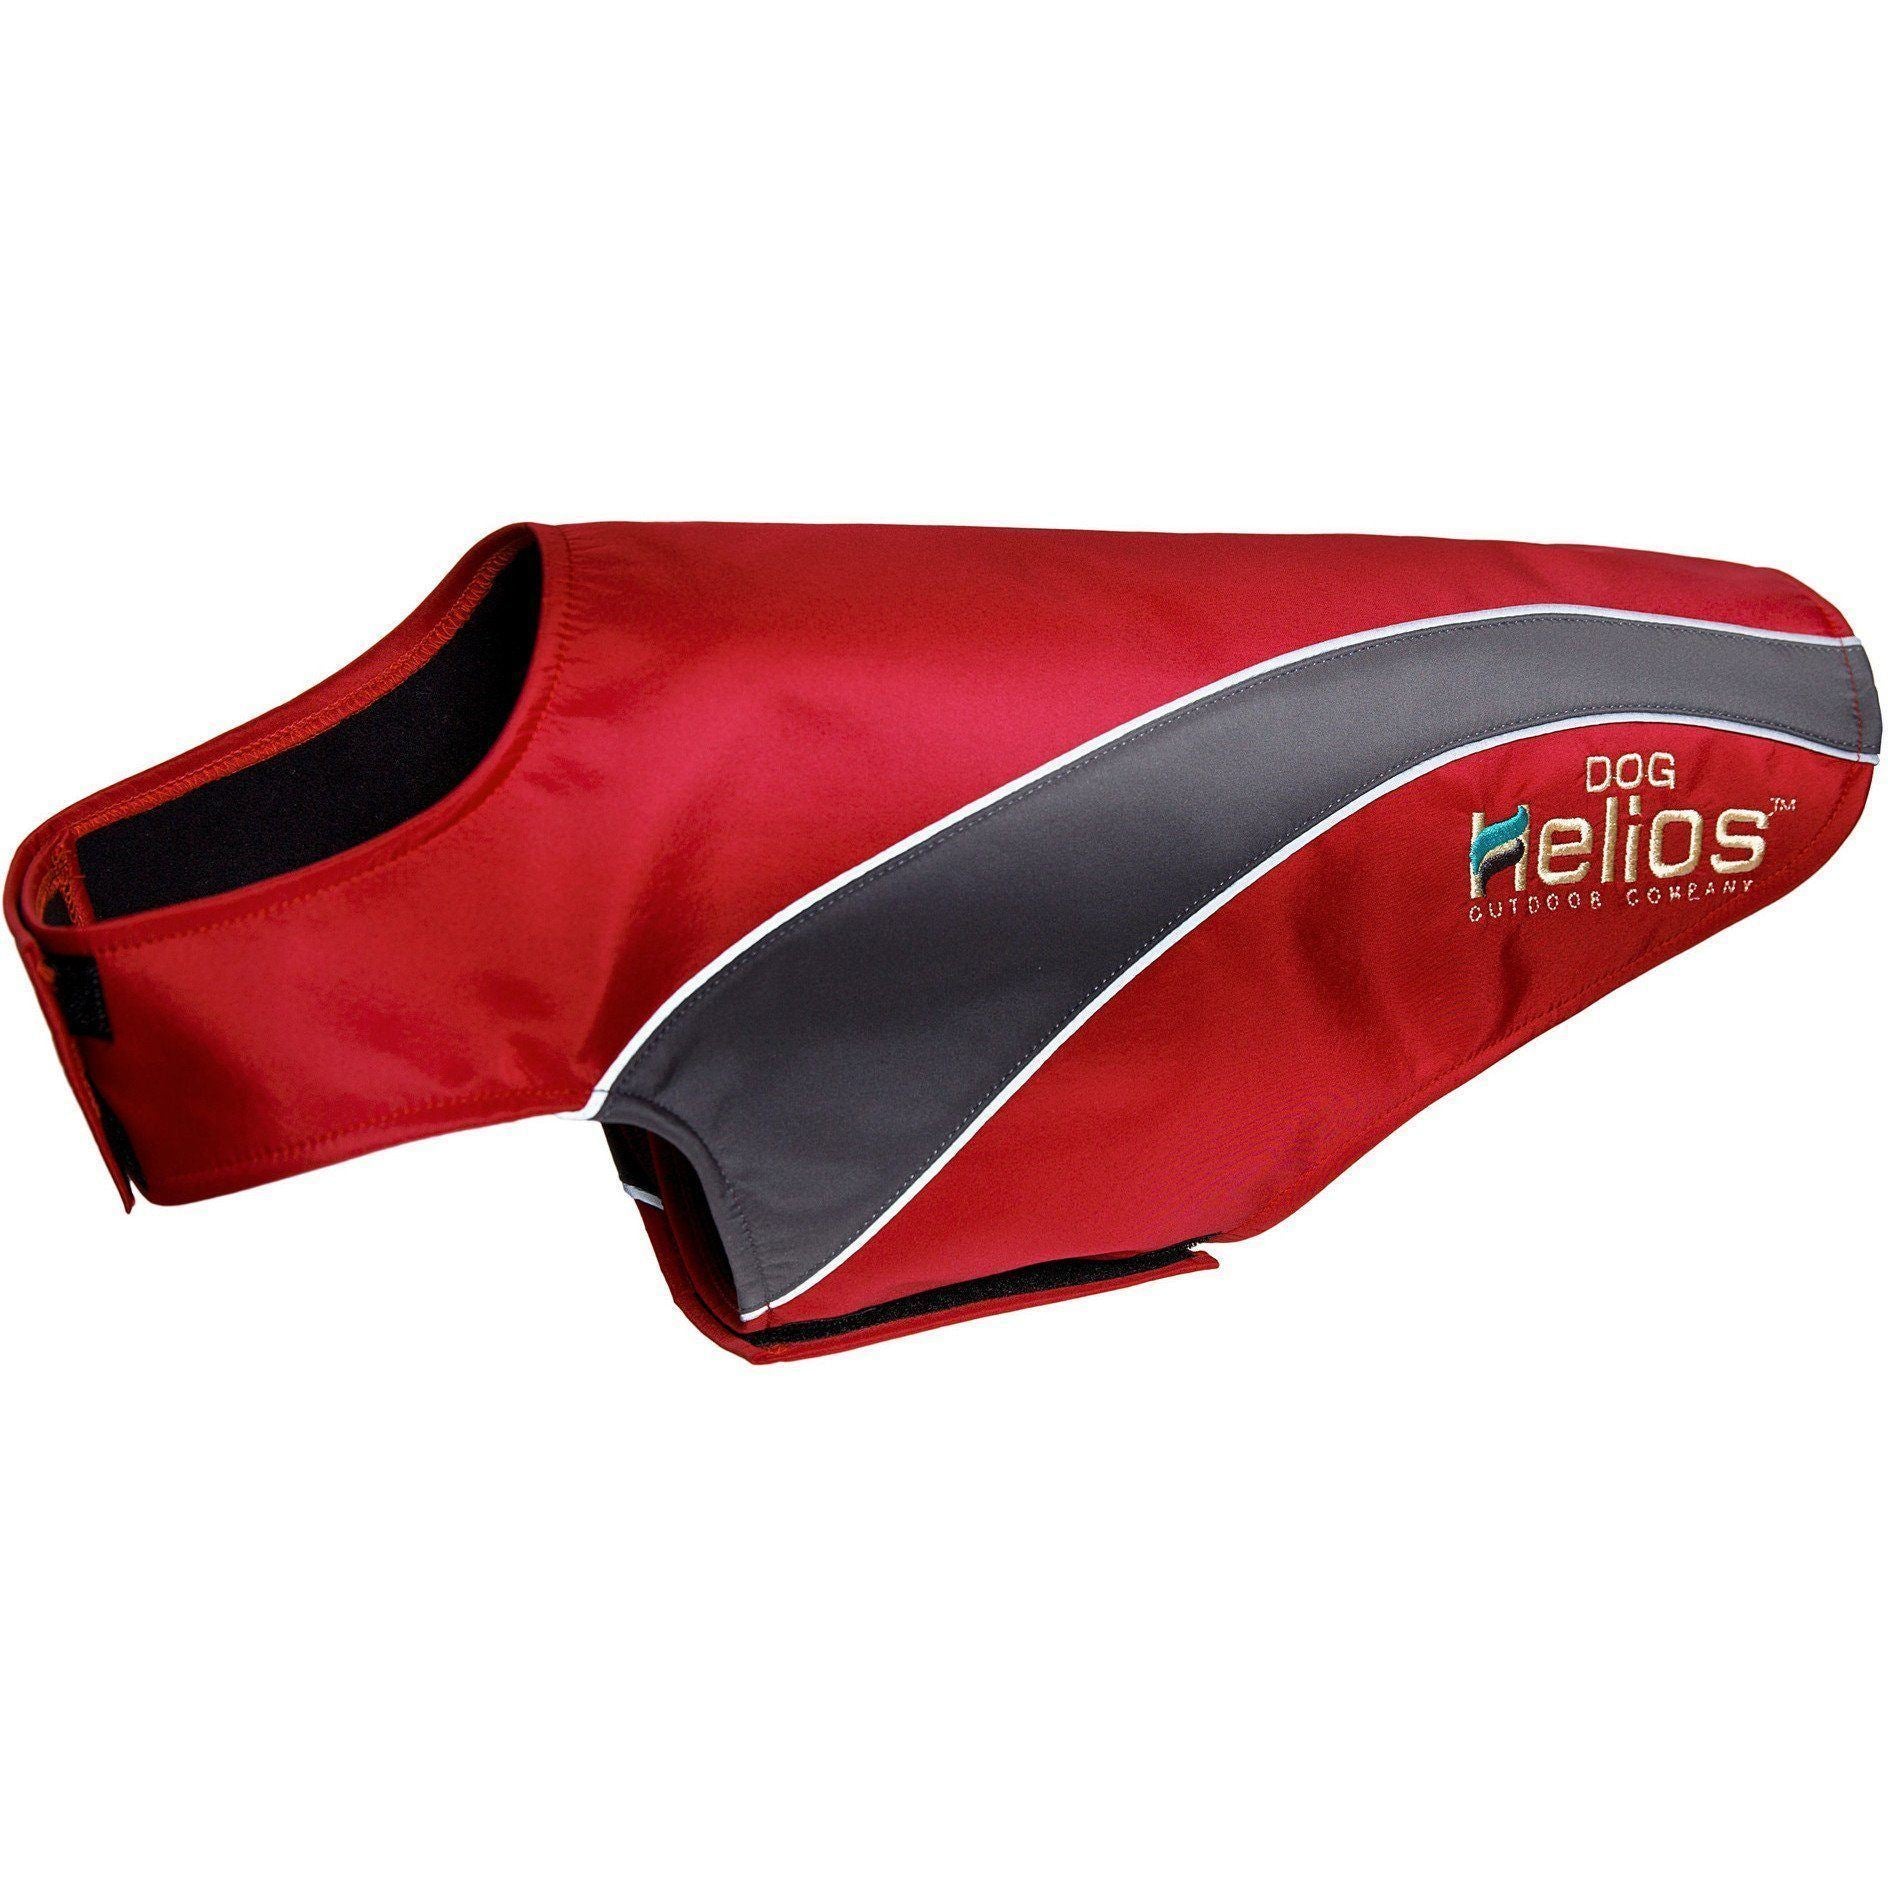 Dog Helios ® Octane Reflective Soft-Shell Neoprene Performance Dog Coat X-Small Red, Grey